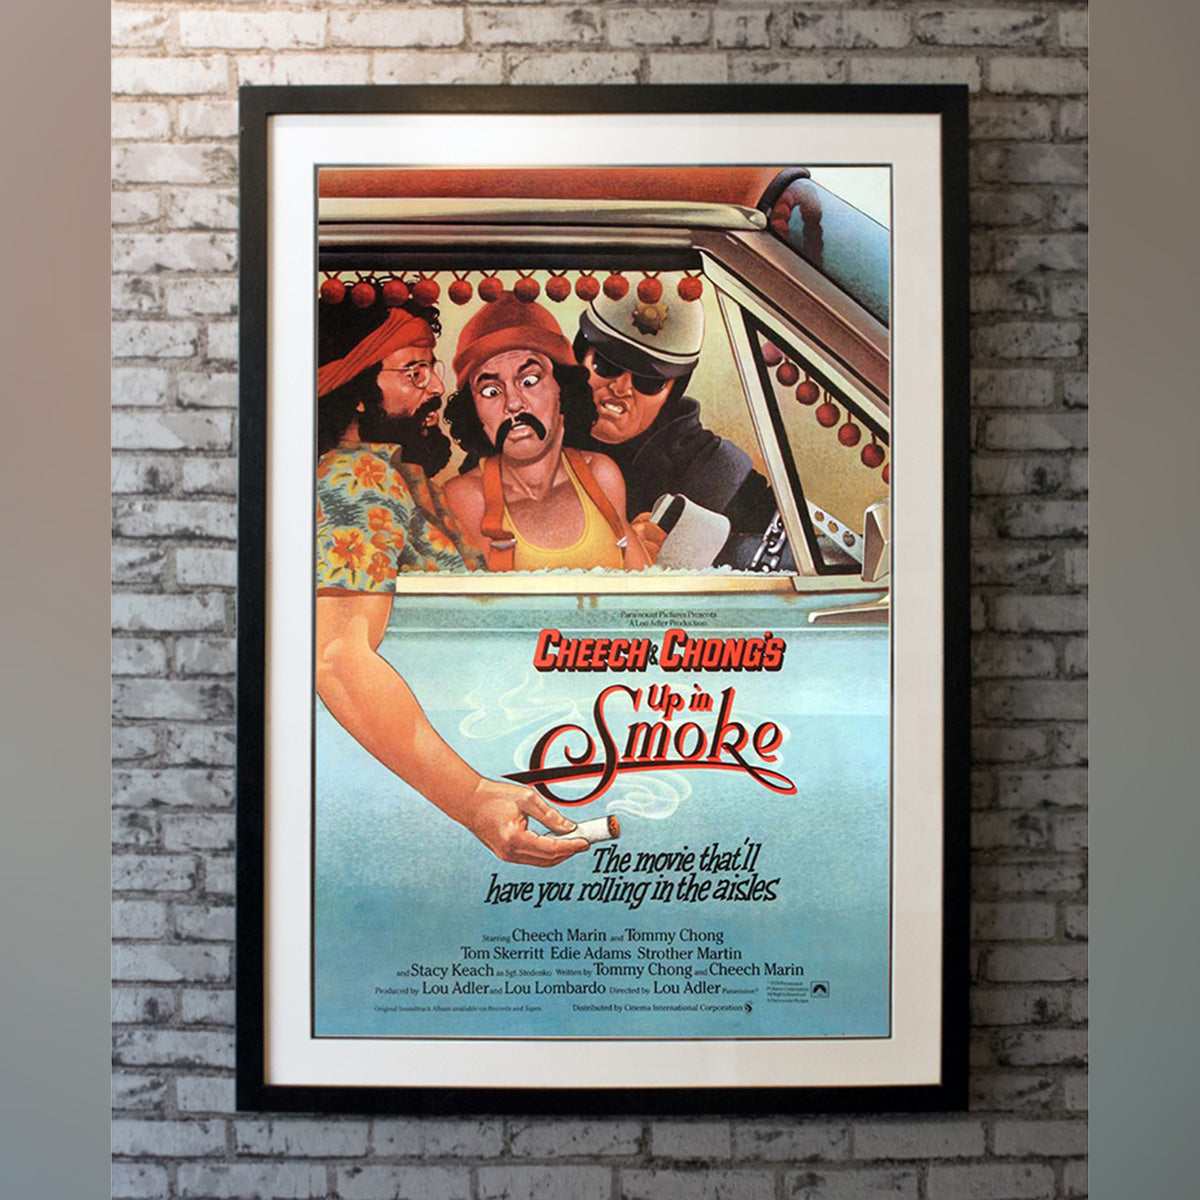 Original Movie Poster of Up In Smoke (1978)